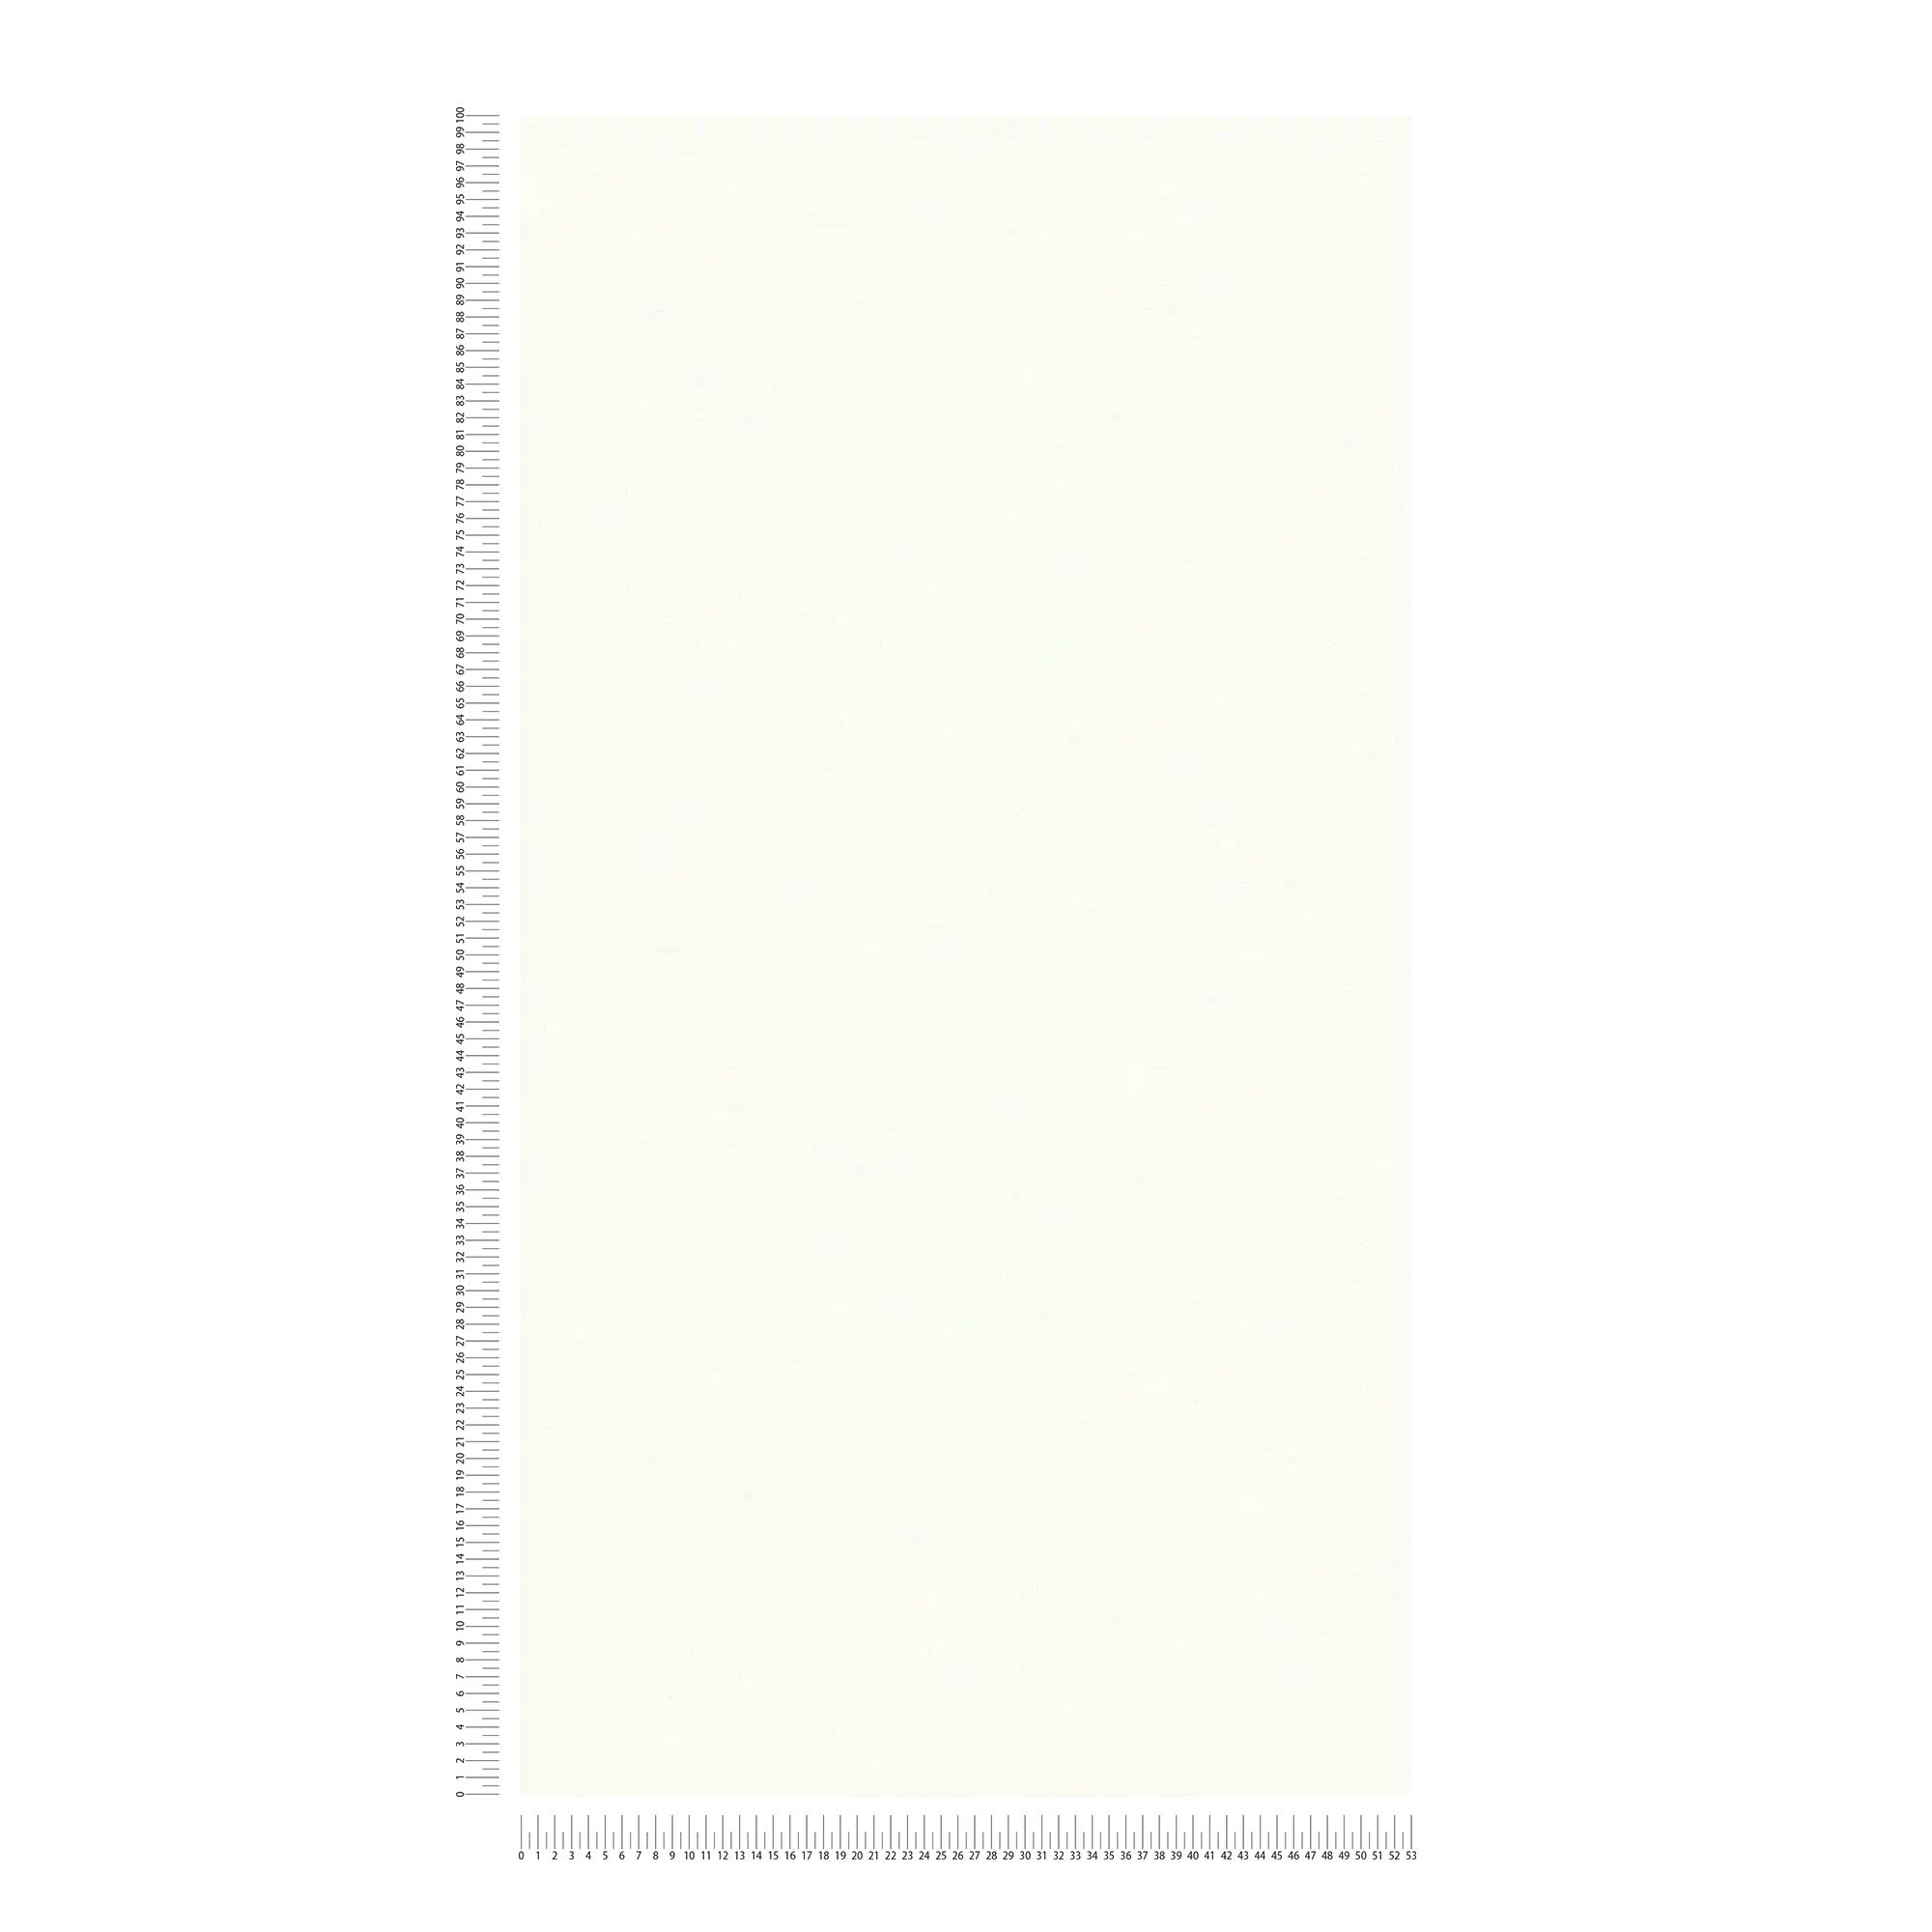             Carta da parati in tessuto non tessuto di MICHALSKY tinta unita, opaca in bianco
        